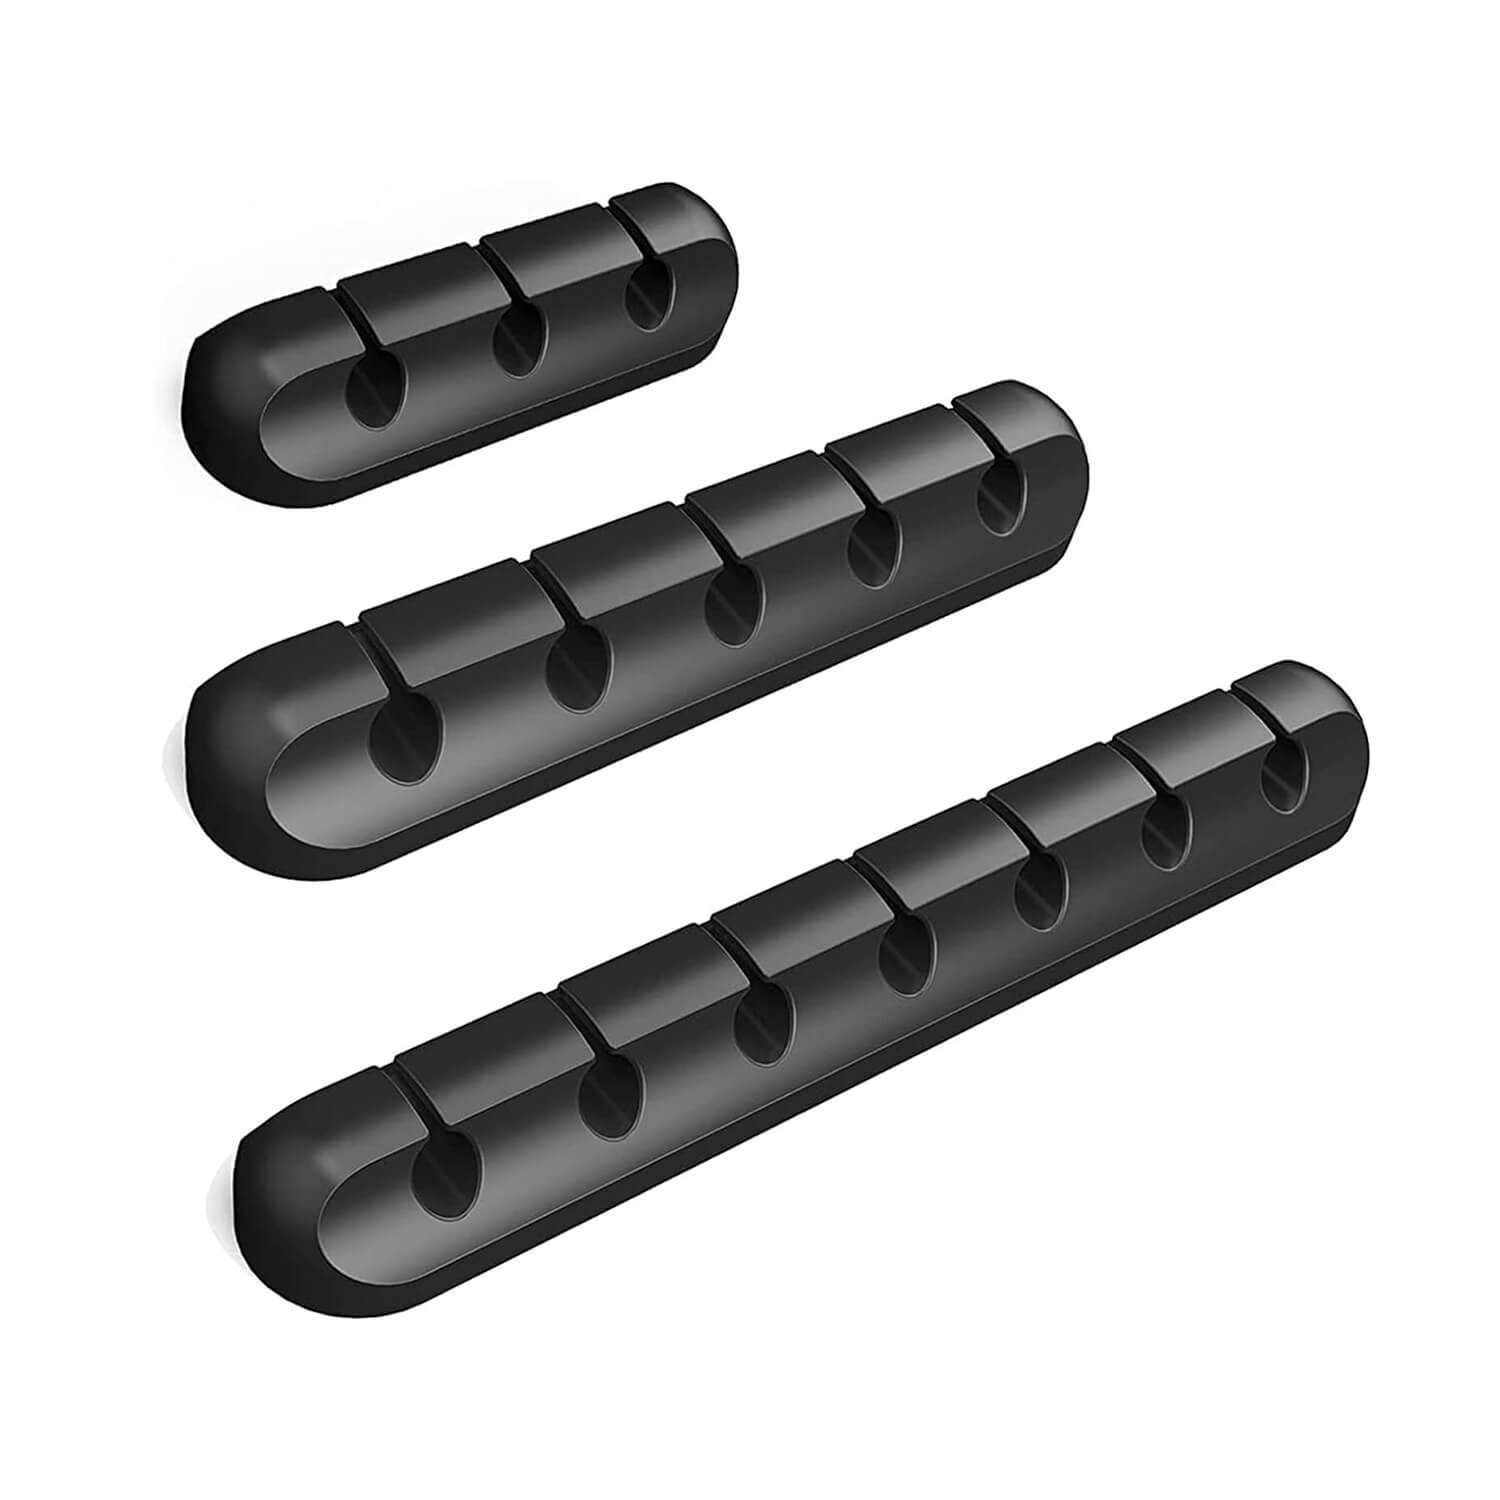 set-suport-organizare-cabluri-edman-3-bucati-3-dimensiuni-diferite-autoadeziv-negru